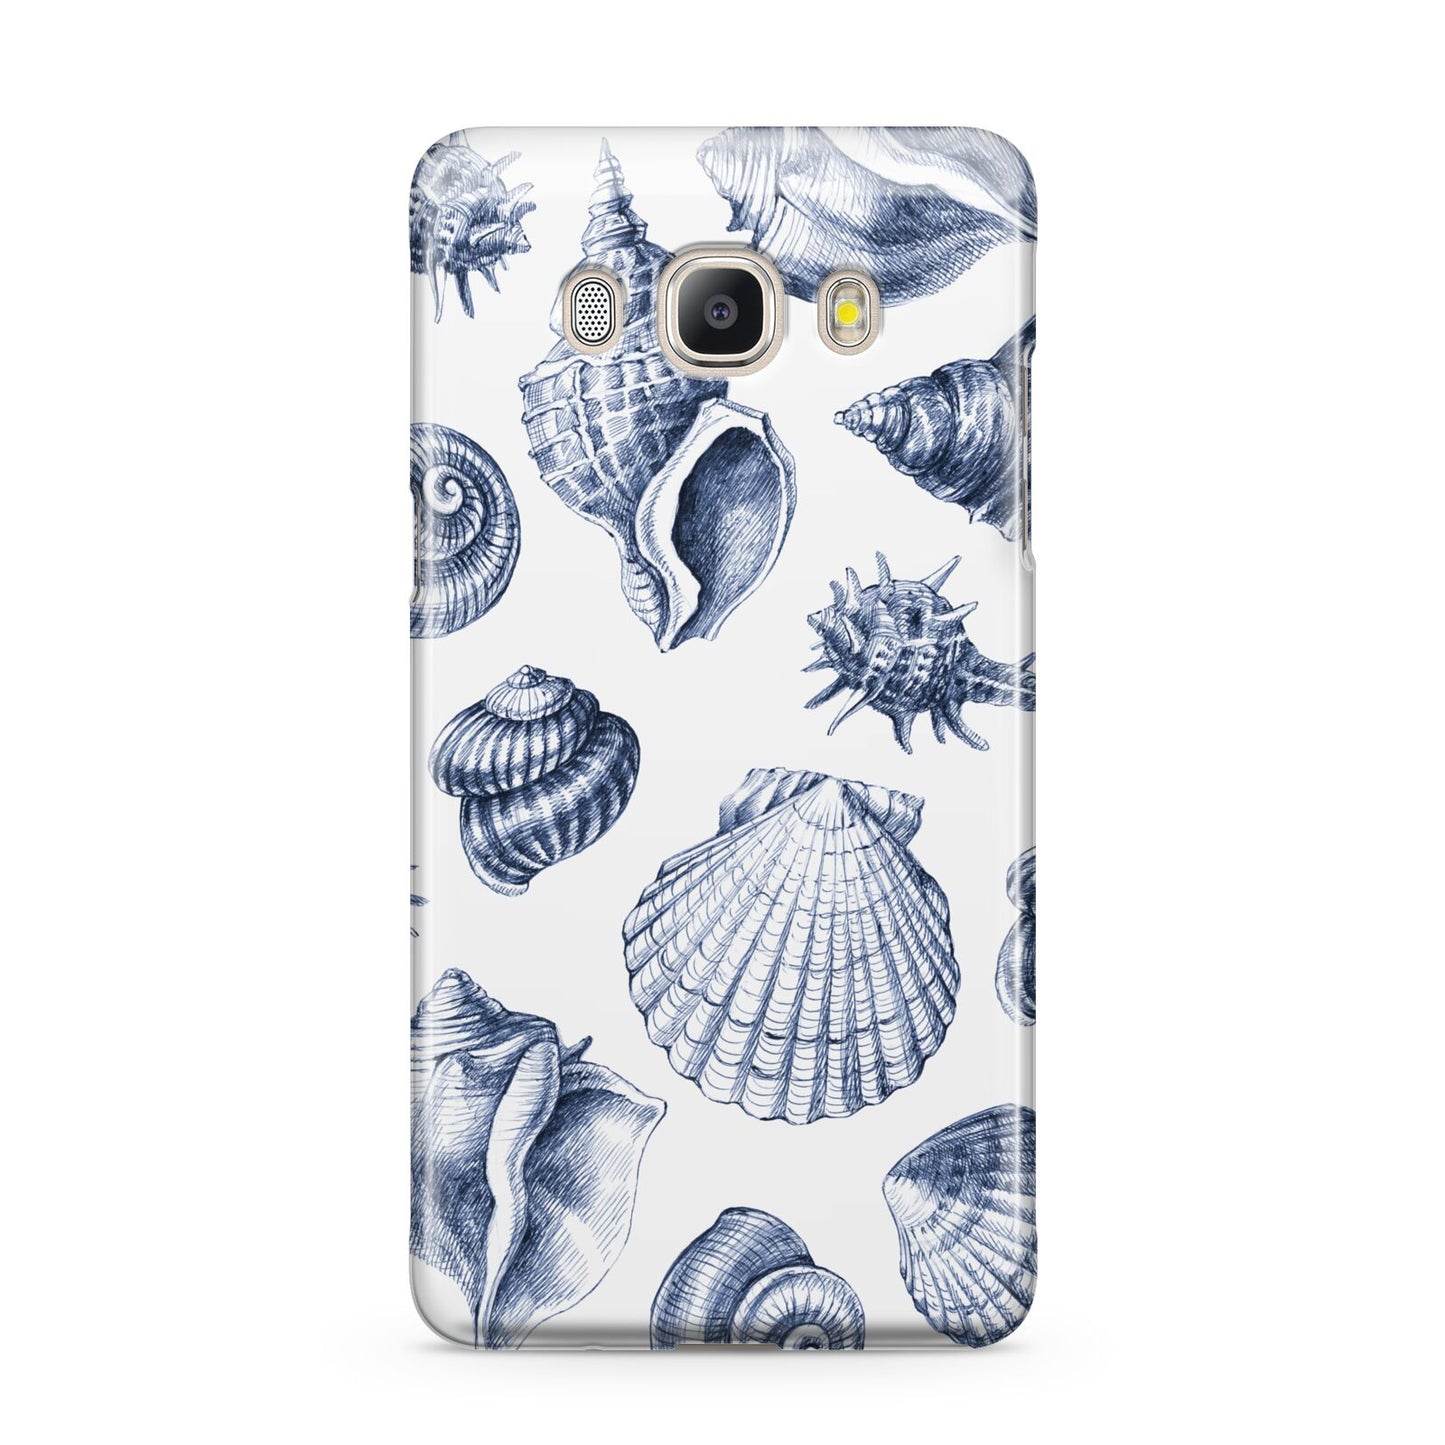 Shell Samsung Galaxy J5 2016 Case